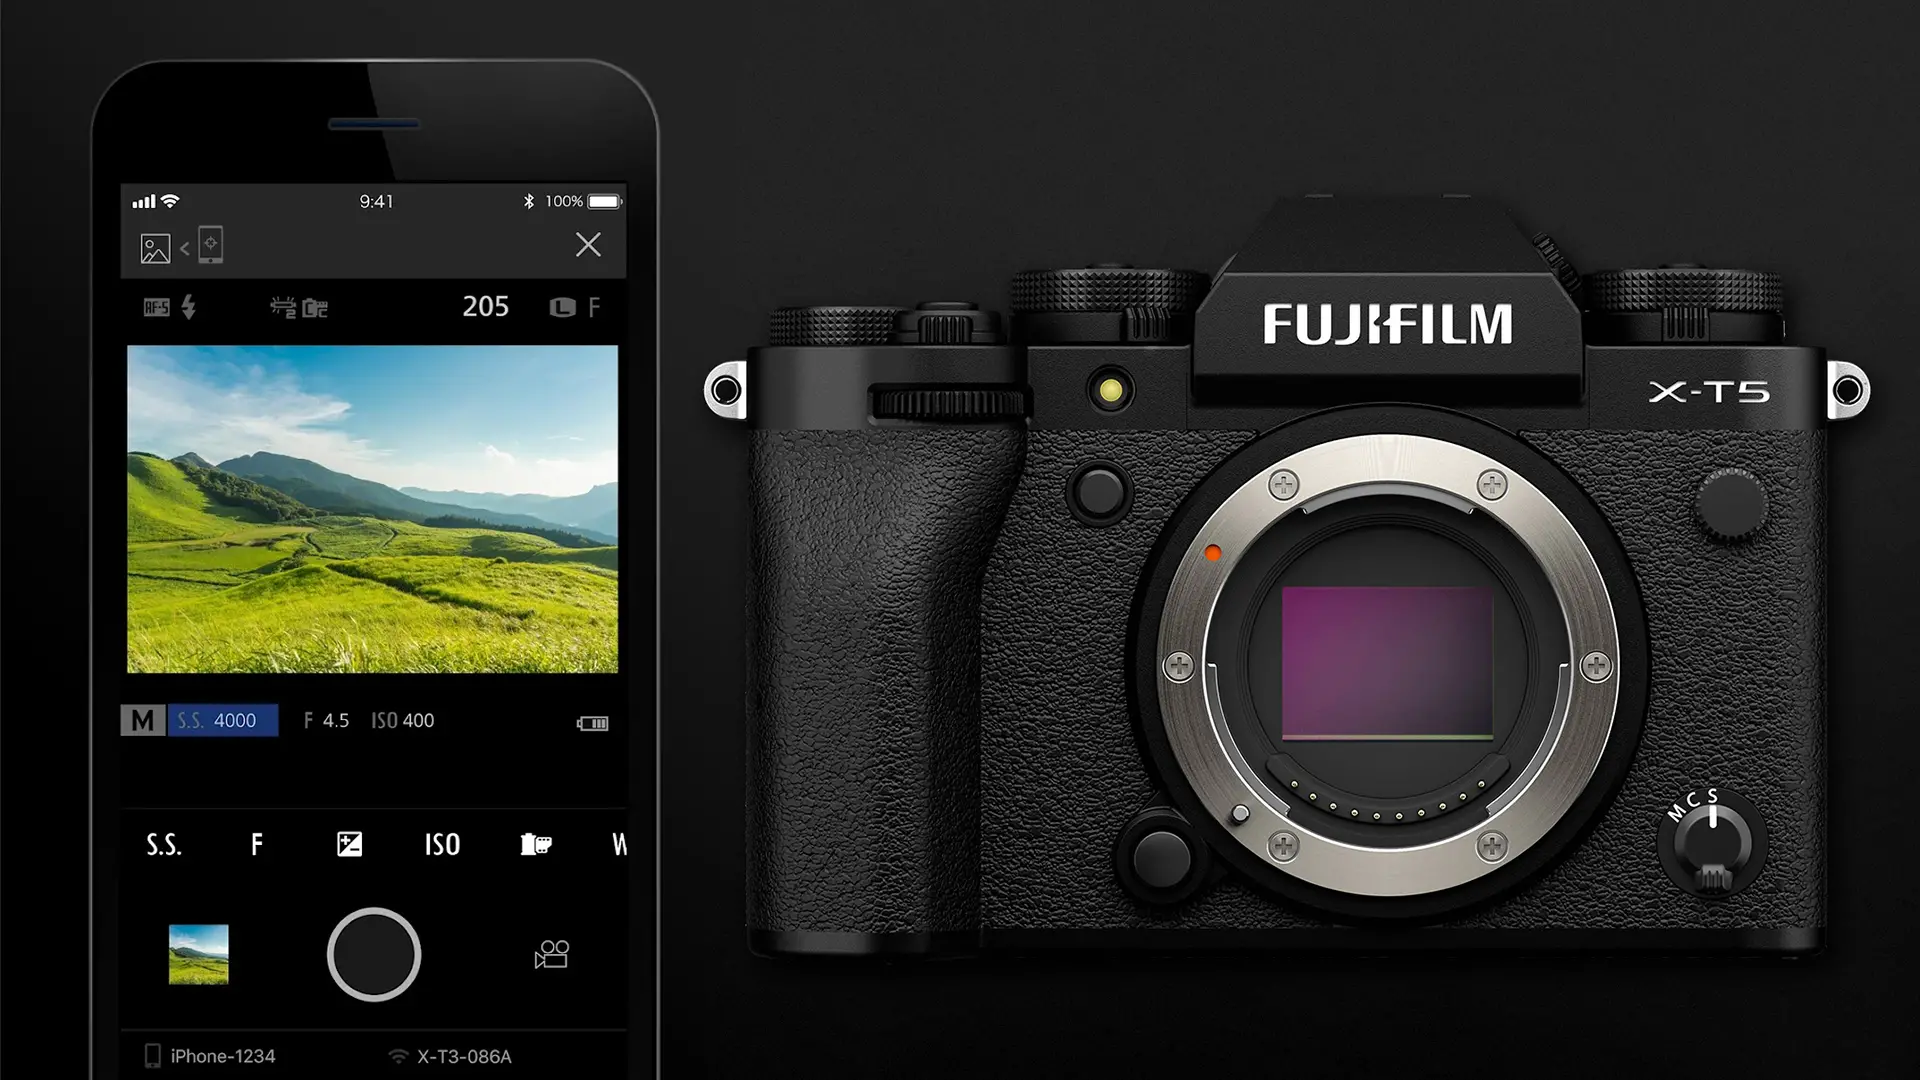 Fujifilm kameranizi uygulamayi kullanarak GUNCELLEMEYIN